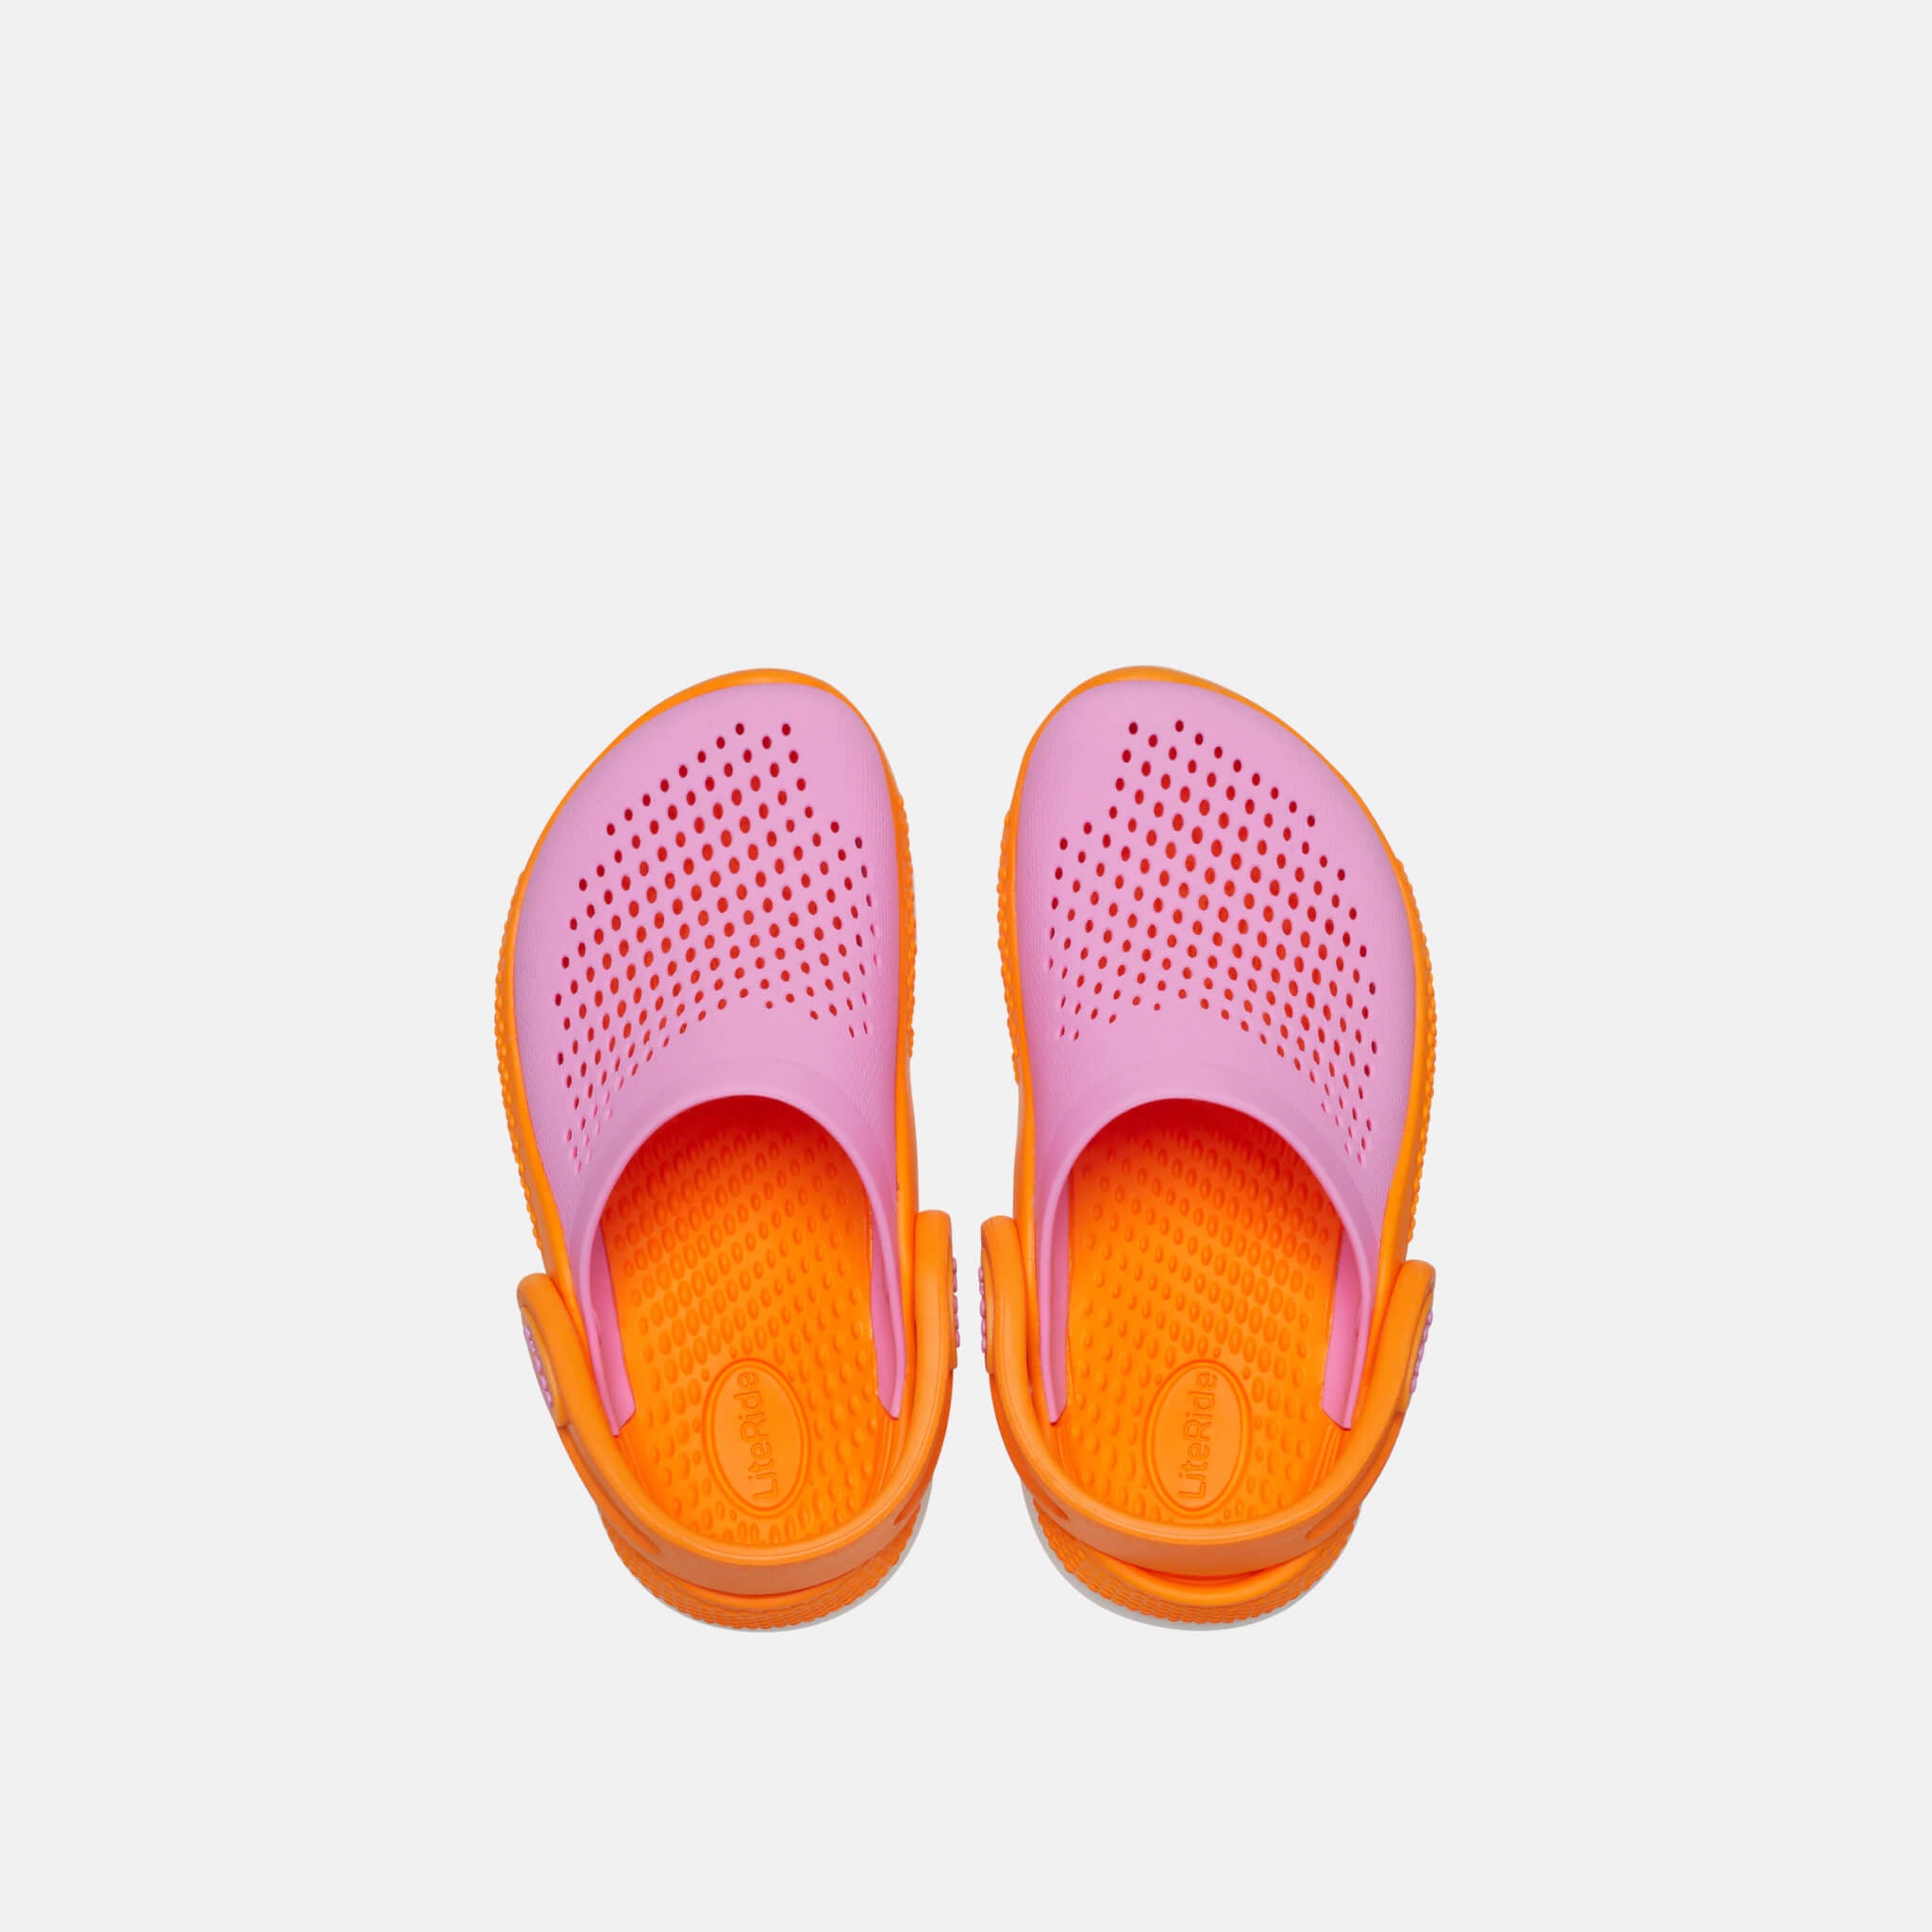 LiteRide 360 Clog T Taffy Pink/Orange Zing